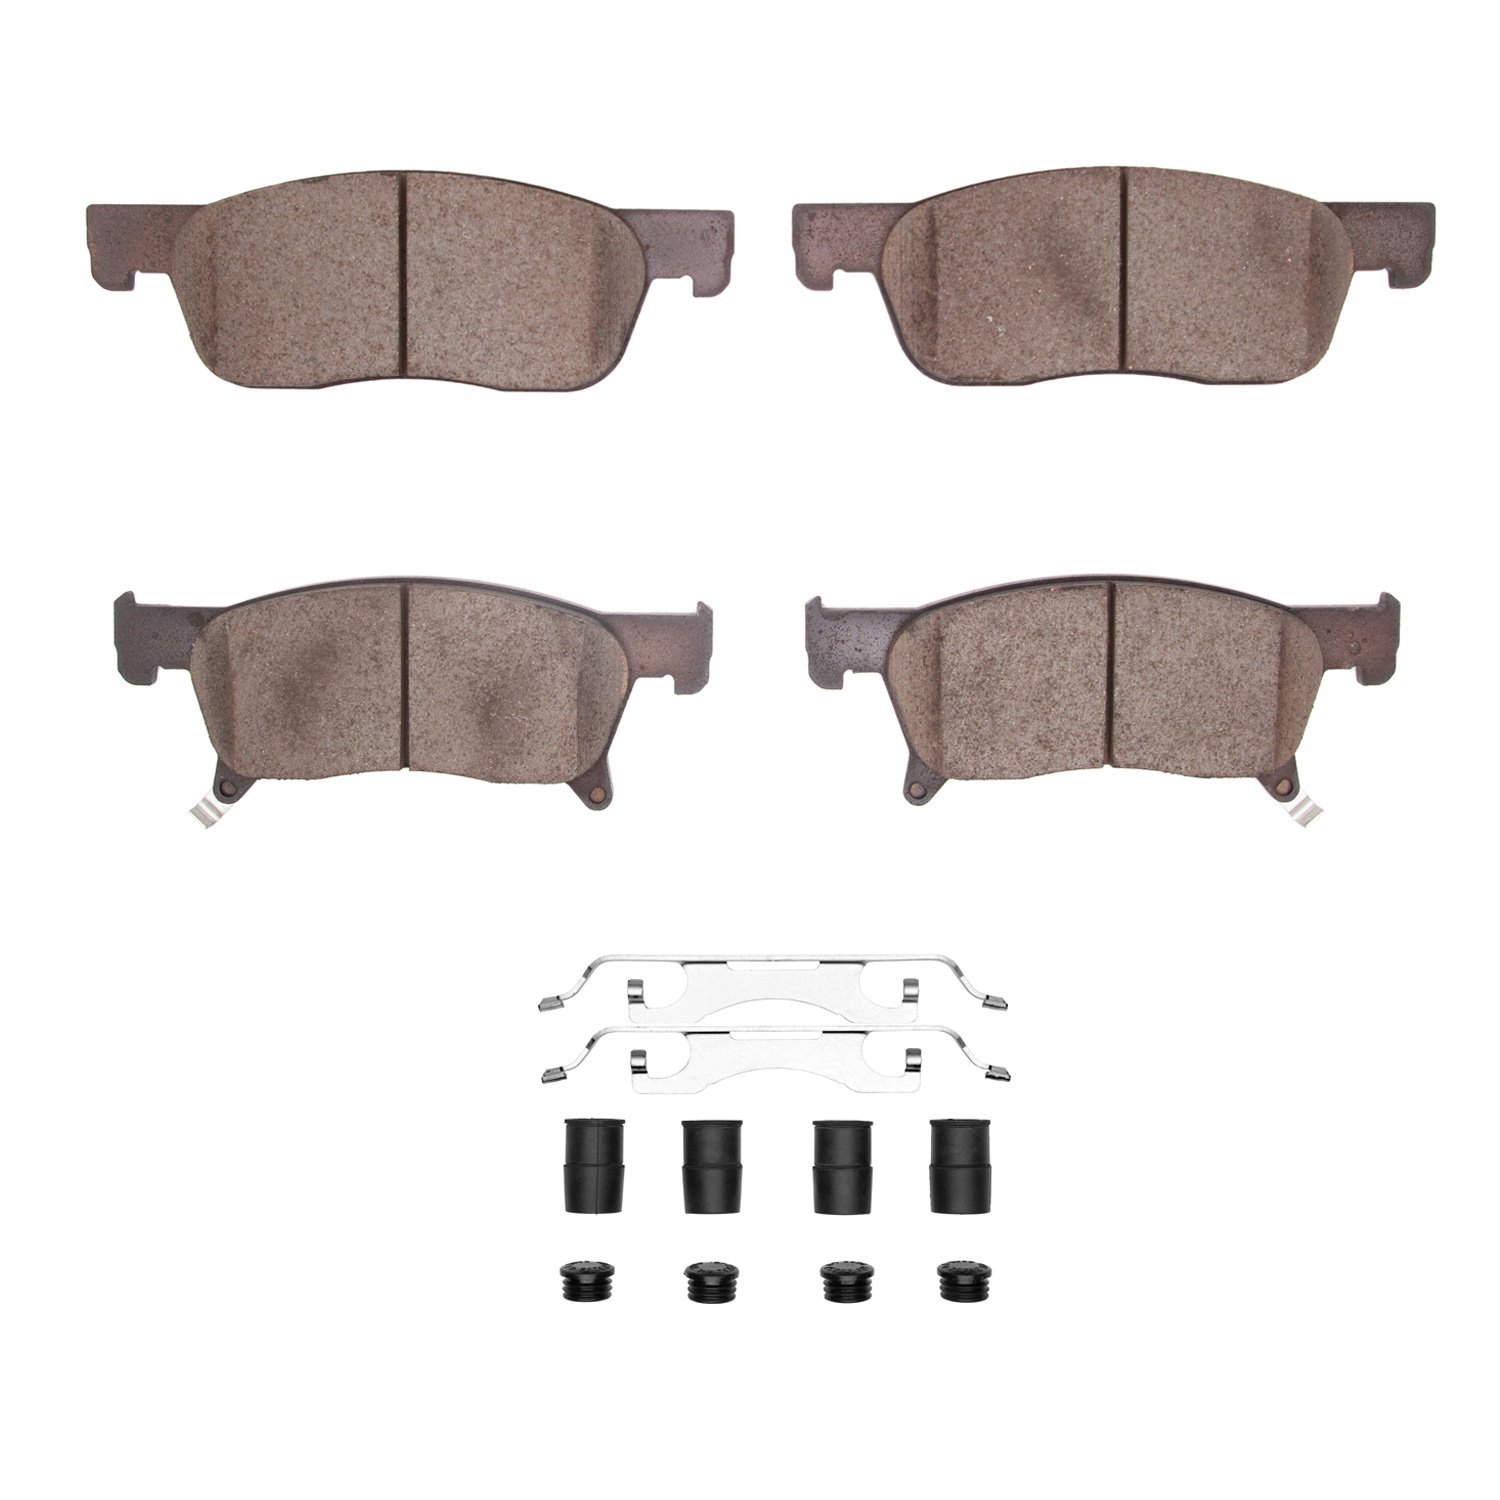 1310-2170-01 3000-Series Ceramic Brake Pads & Hardware Kit, Fits Select Subaru, Position: Front